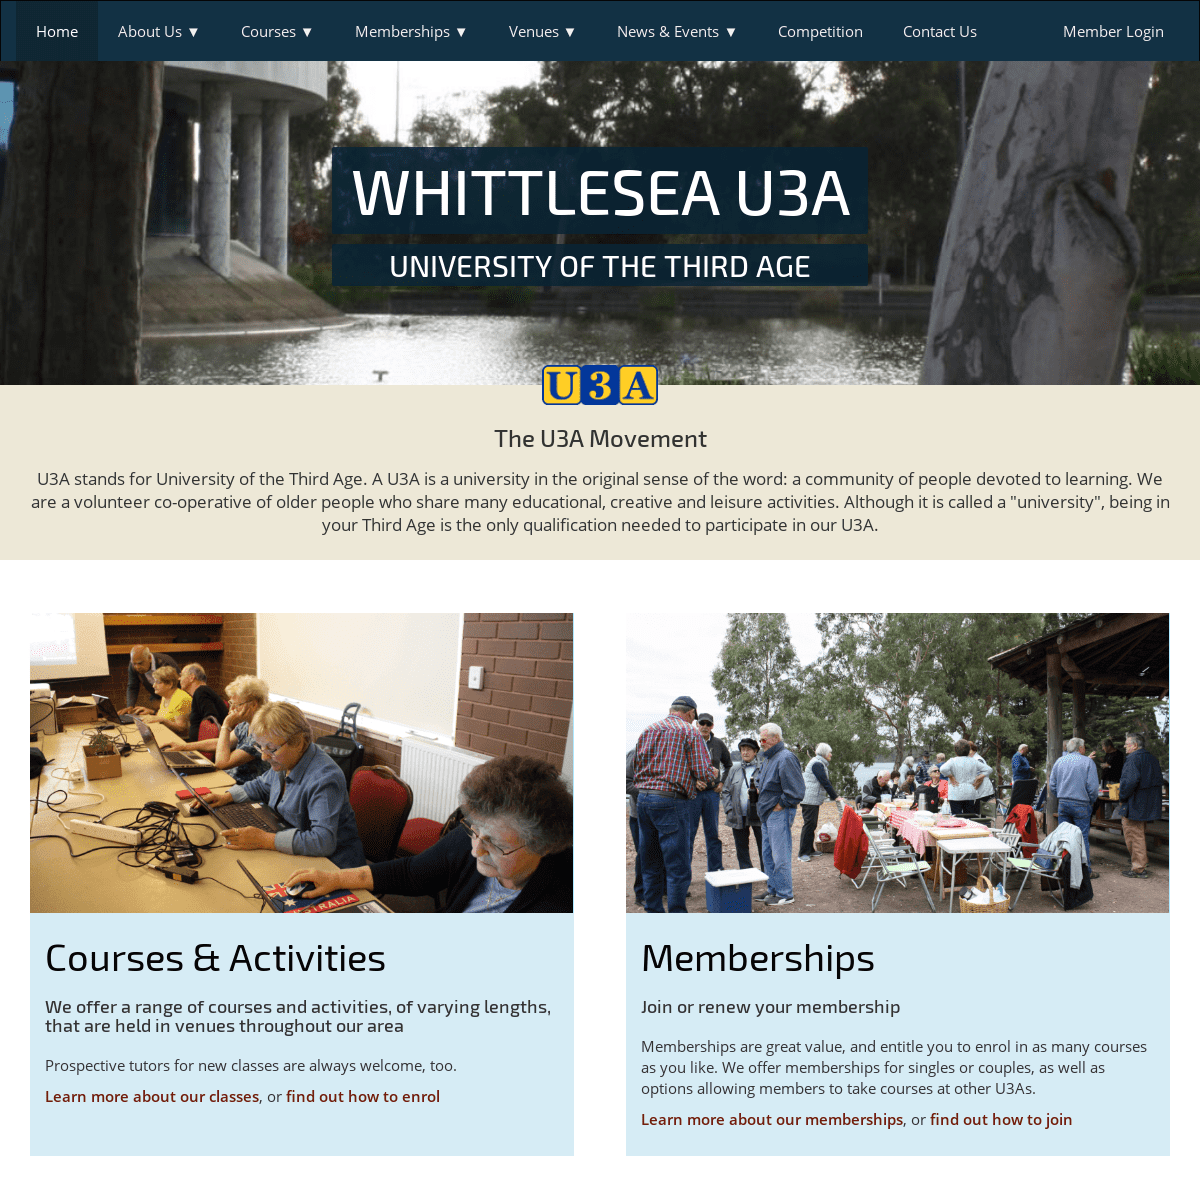 Whittlesea U3A – University of the Third Age